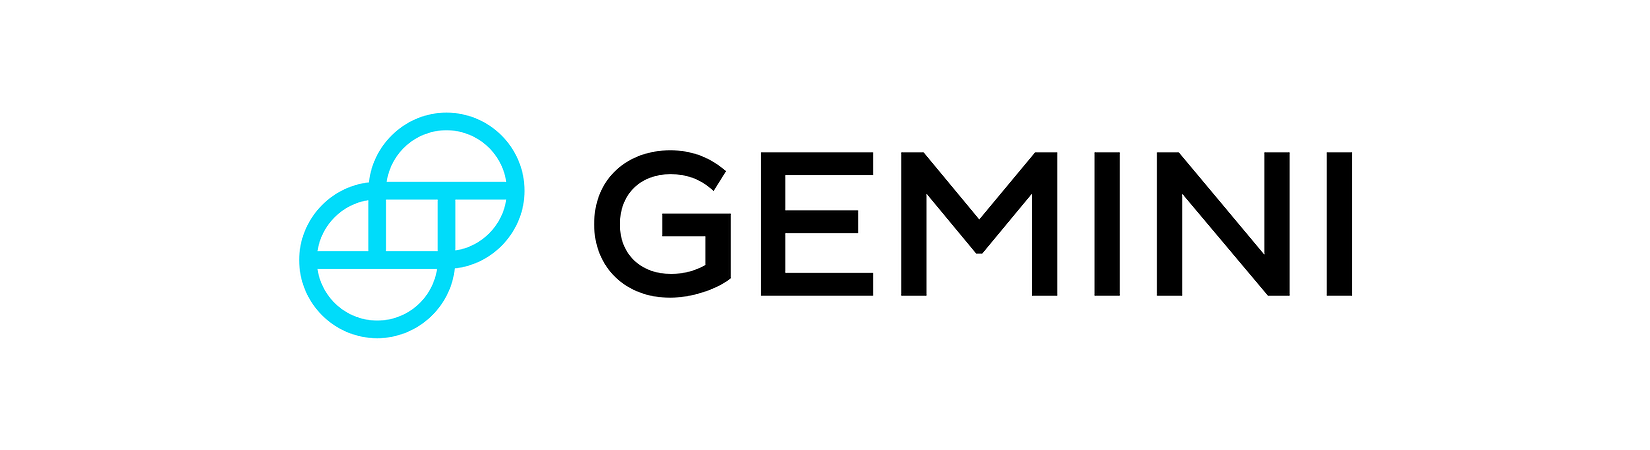 Does gemini support litecoin обмен биткоин банк с петербург